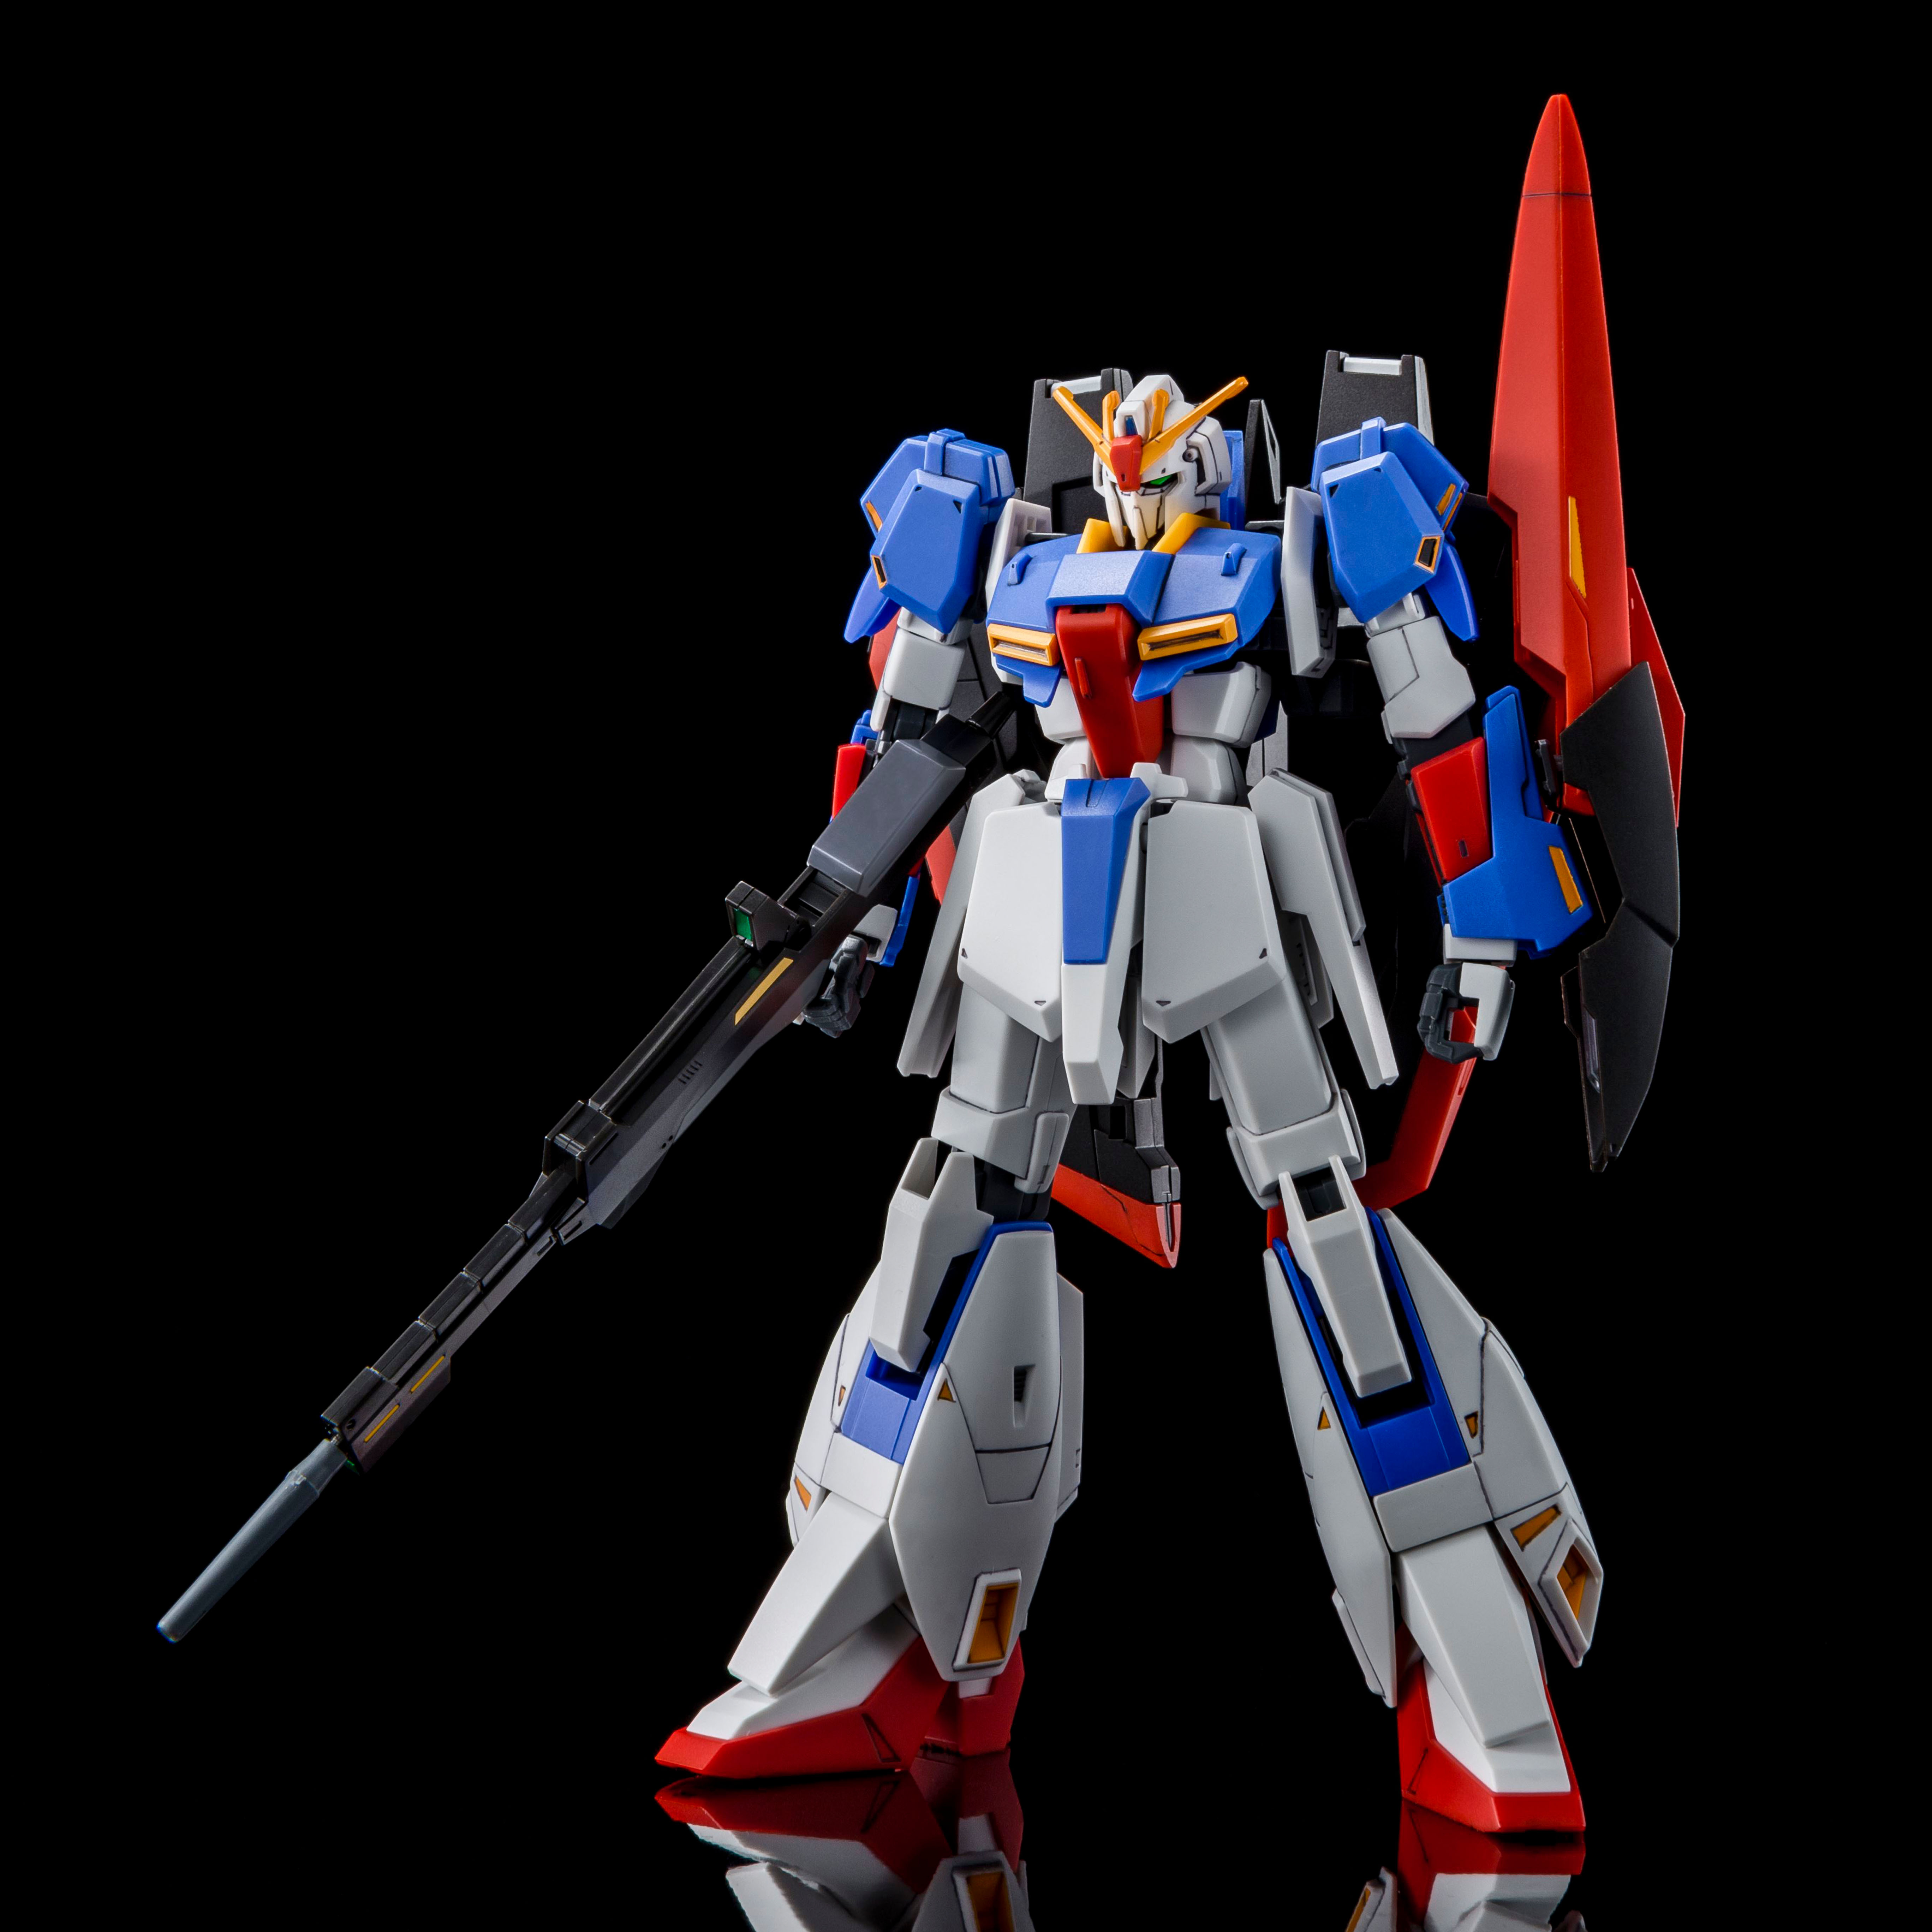 U.C. 0088 P-BANDAI HGUC 1/144 Zeta Gundam Plastic Model Kit